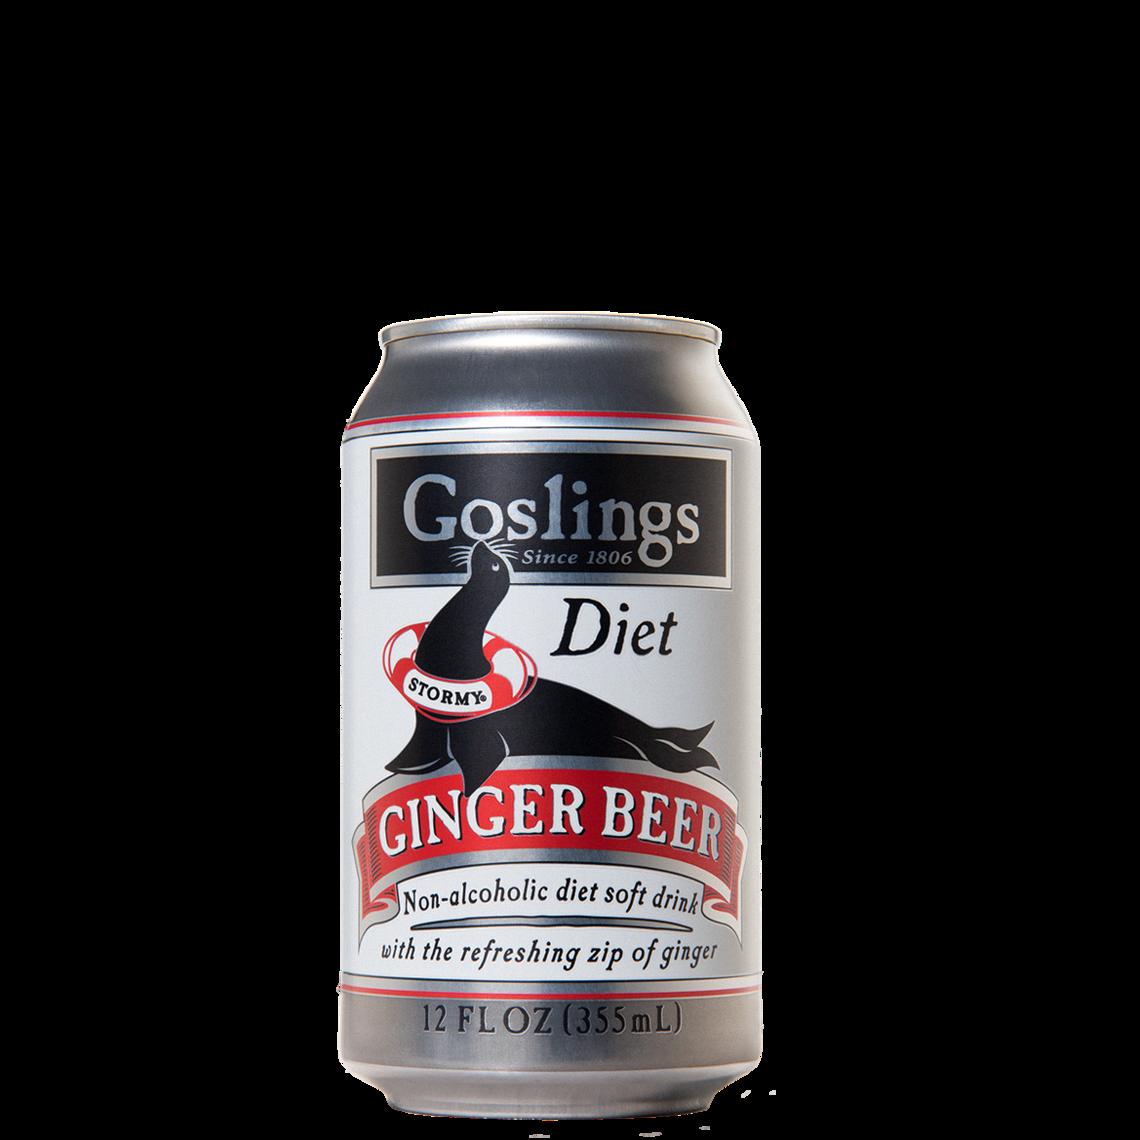 goslings ginger beer nutrition facts 3